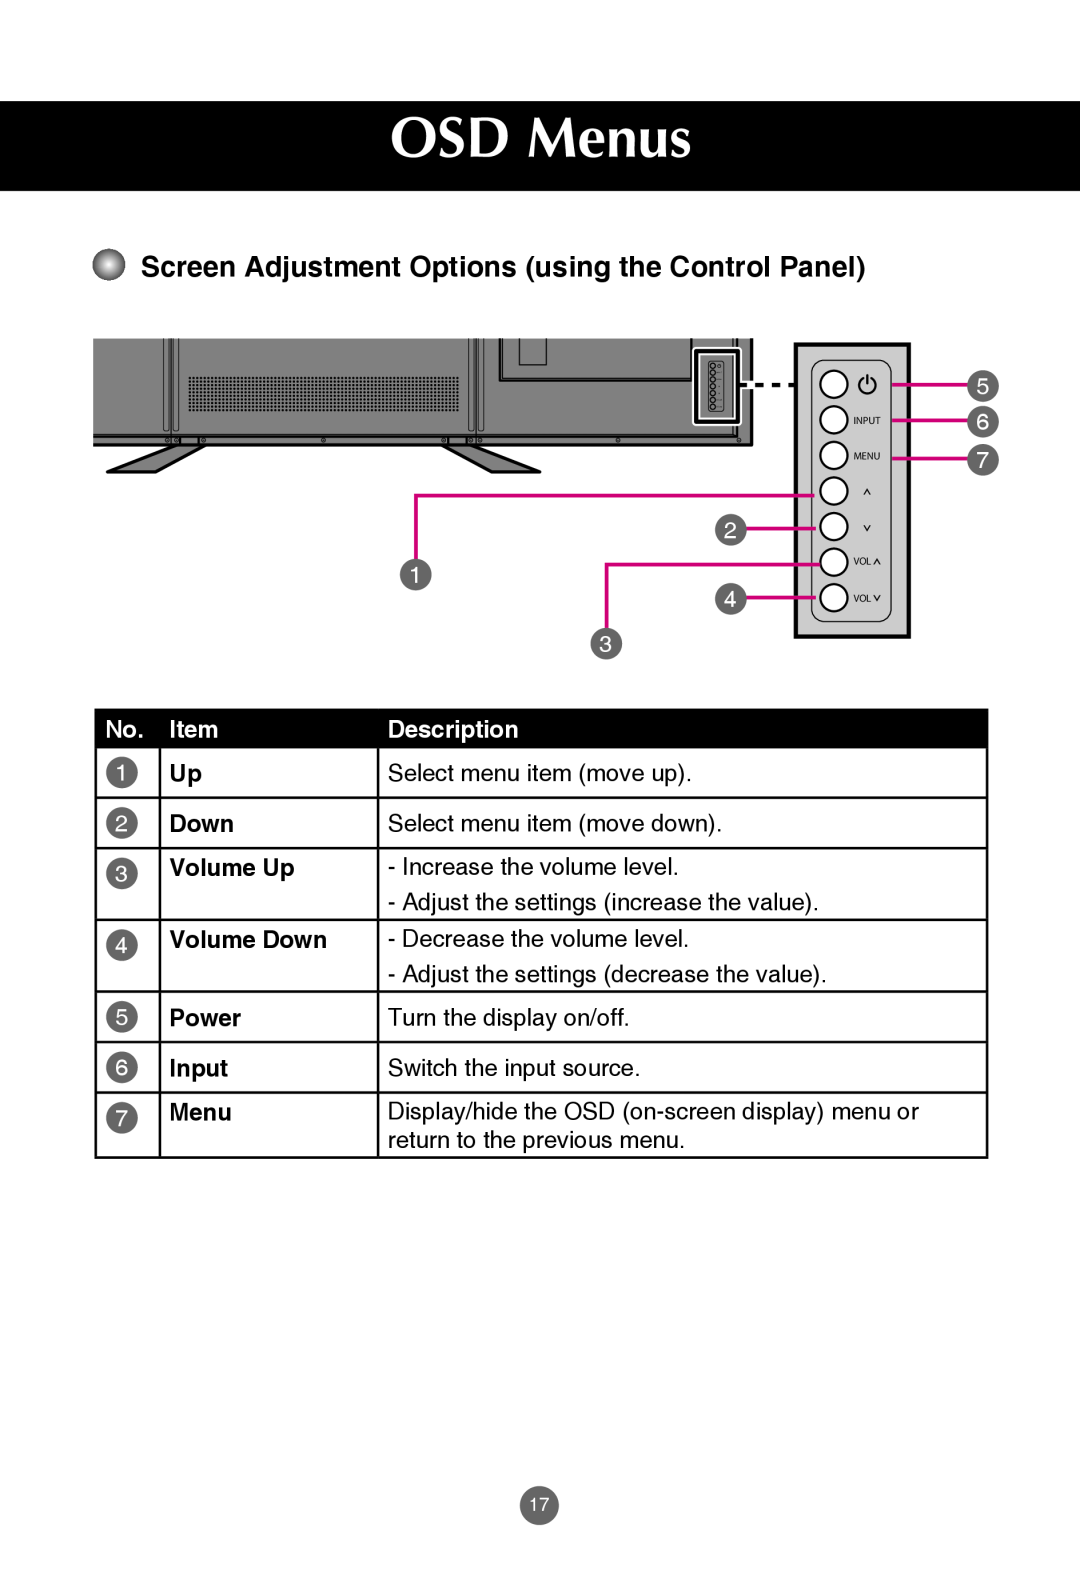 JVC rs-840UD OSD Menus, Screen Adjustment Options using the Control Panel, Select menu item move up, Down, Volume Up 